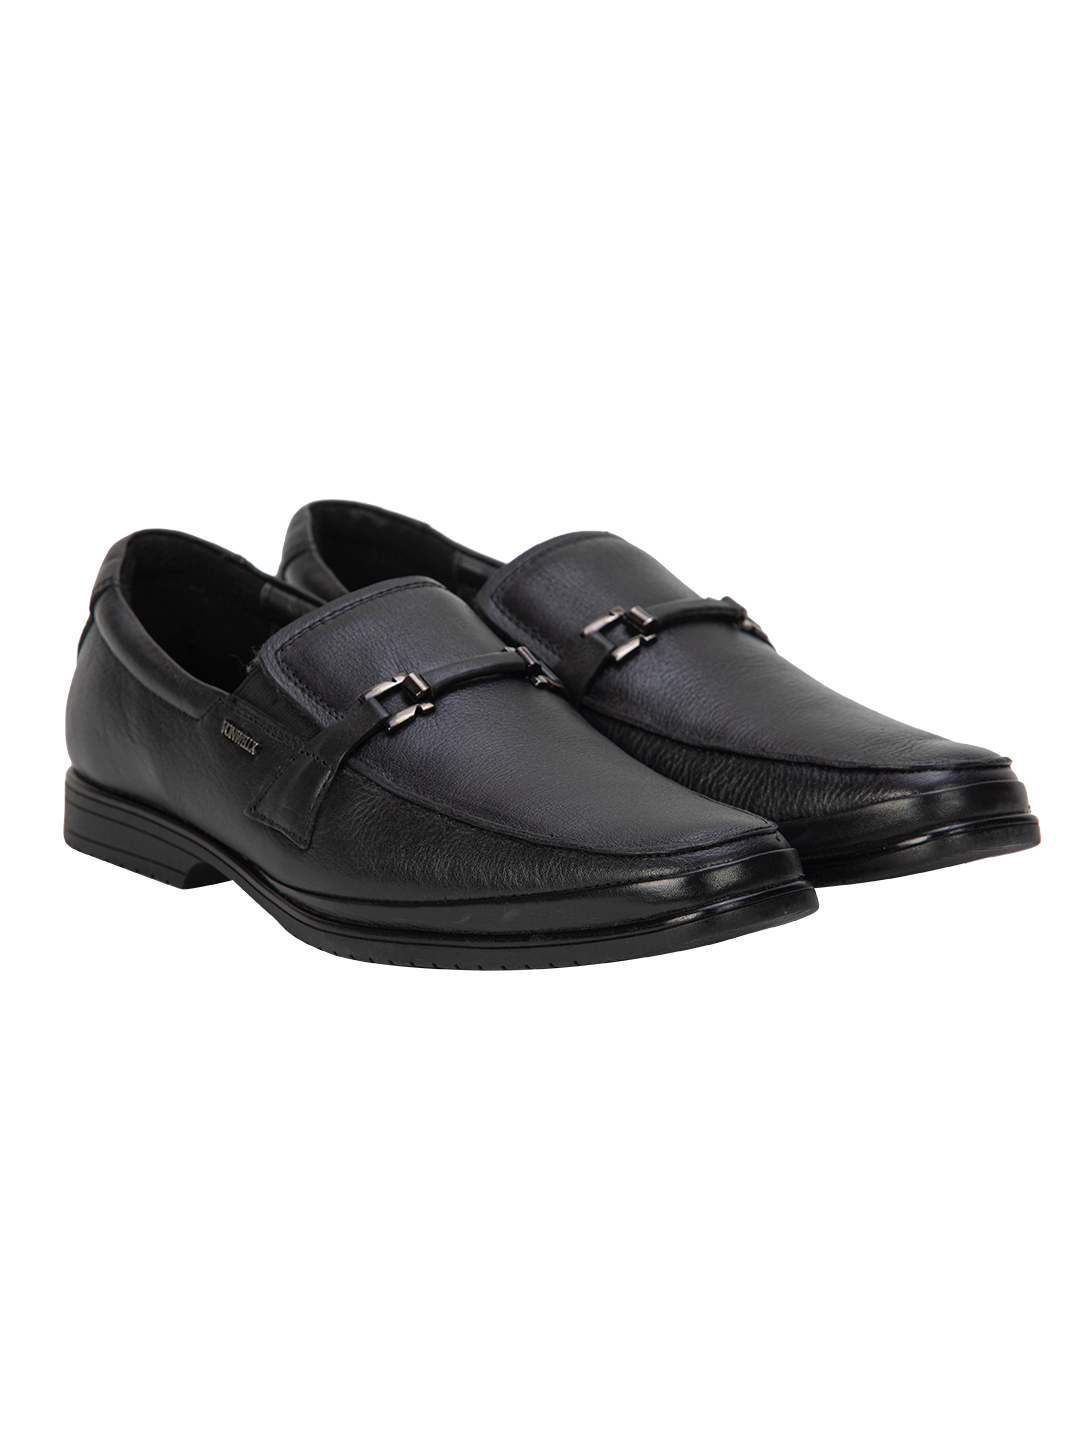 Buy Von Wellx Germany Comfort Black Jace Shoes Online in Jeddah